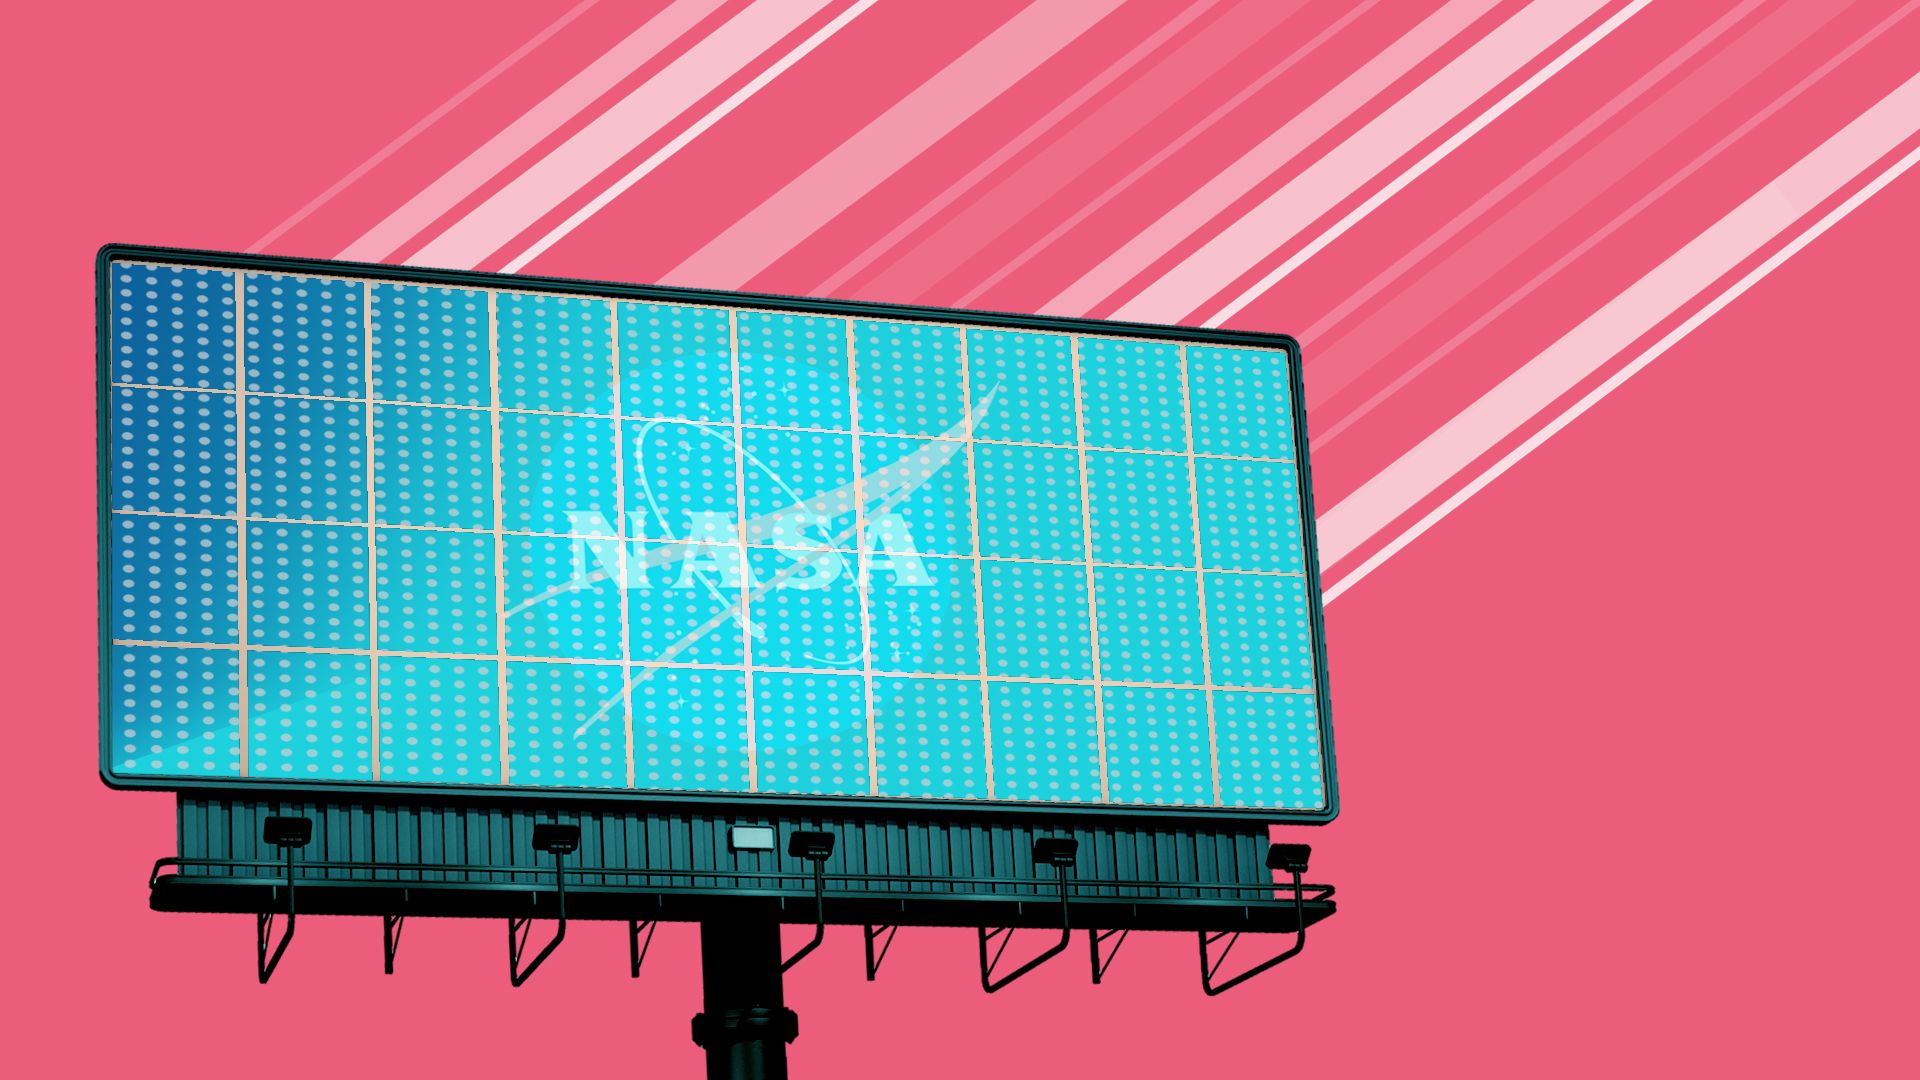 Illustration of billboard with NASA logo